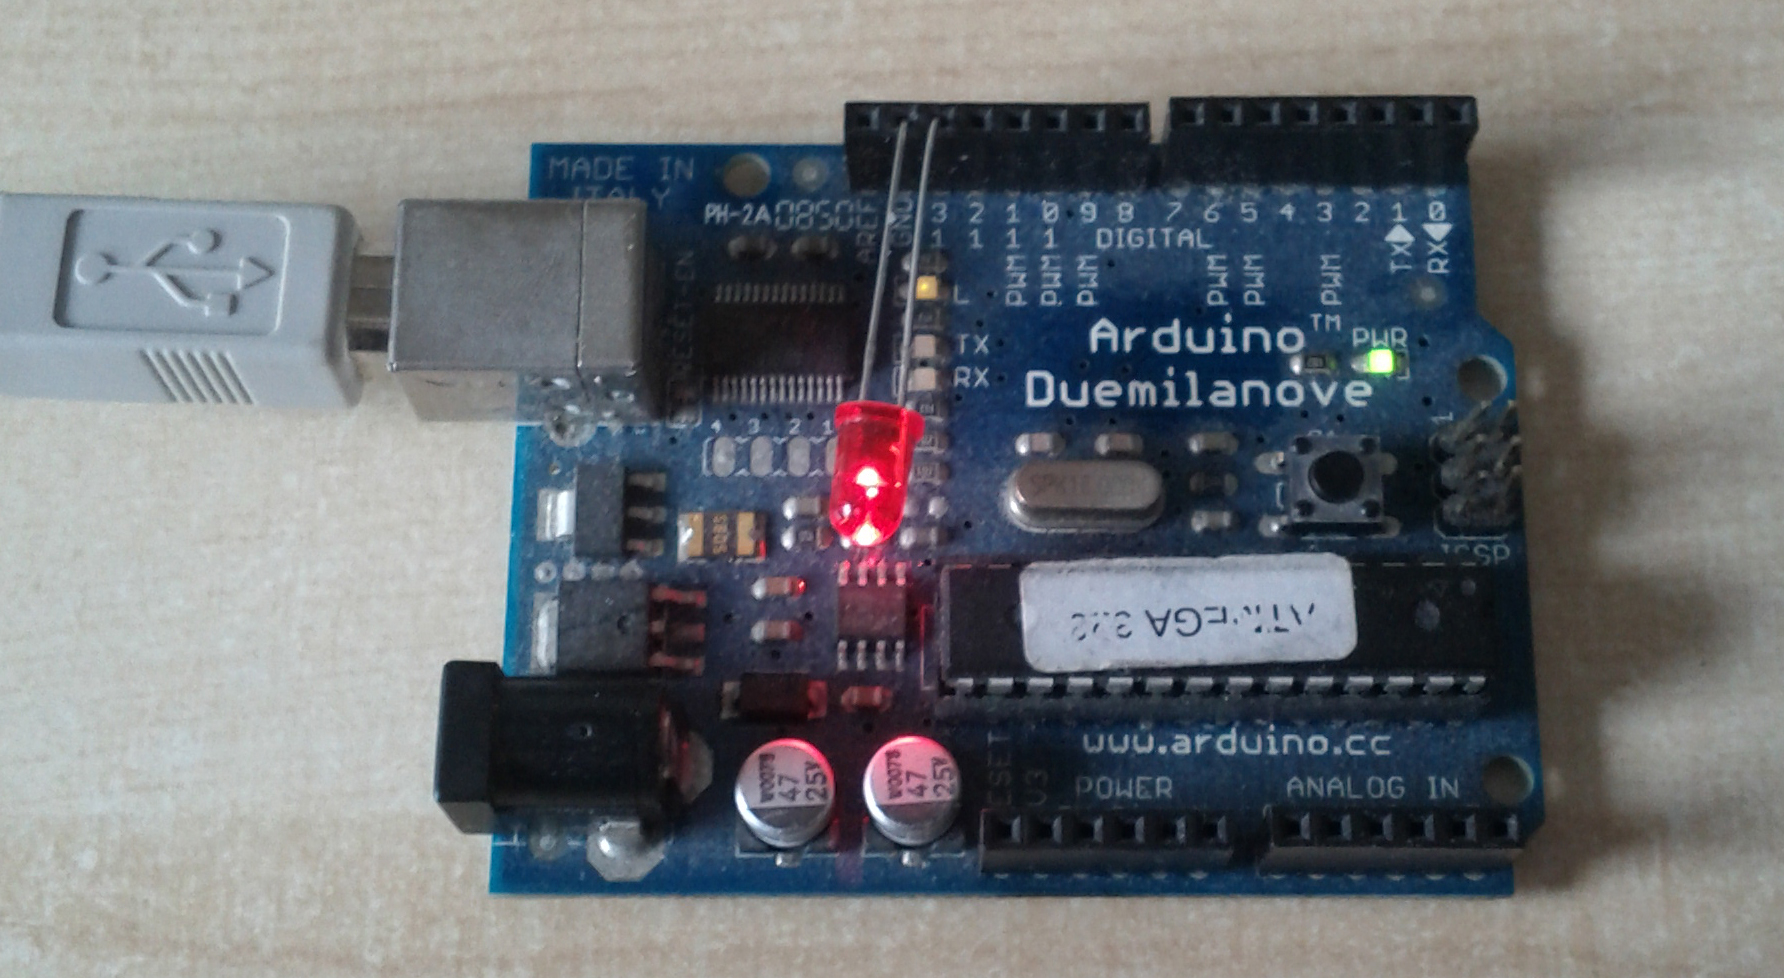 My Arduino